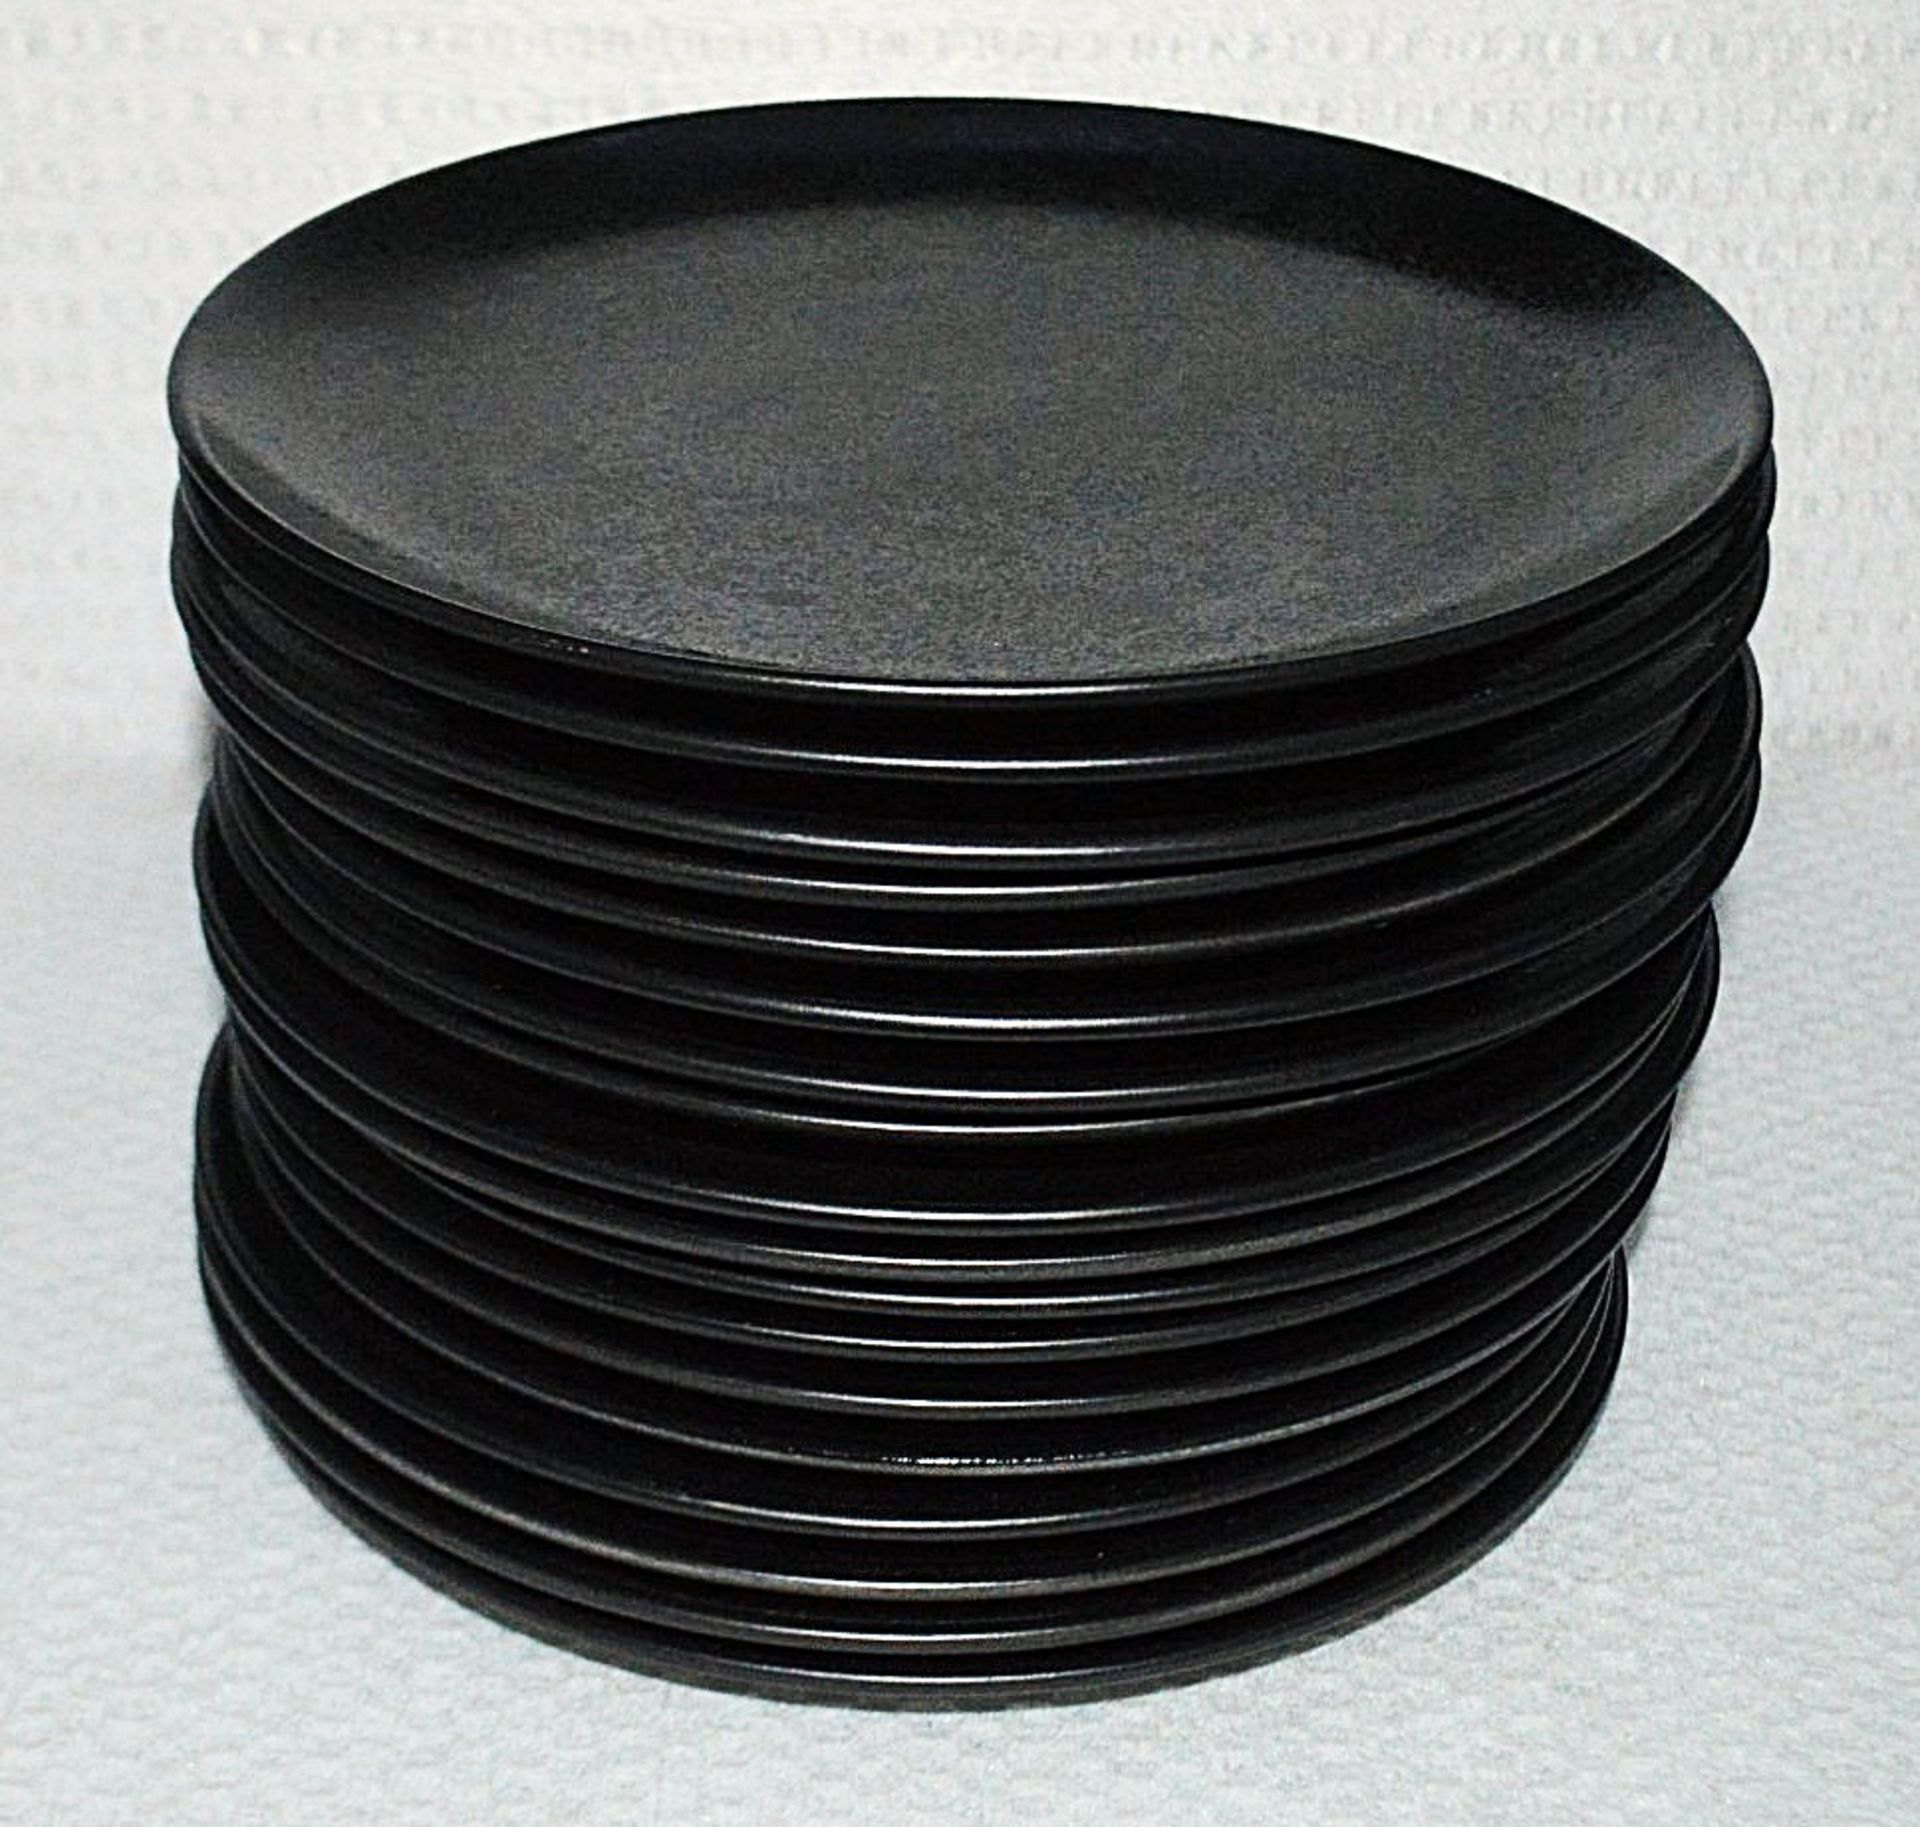 30 x RAK Porcelain 'Karbon' Black Round Flat Porcelain Plates - 26.5cm In Diameter - Image 2 of 5